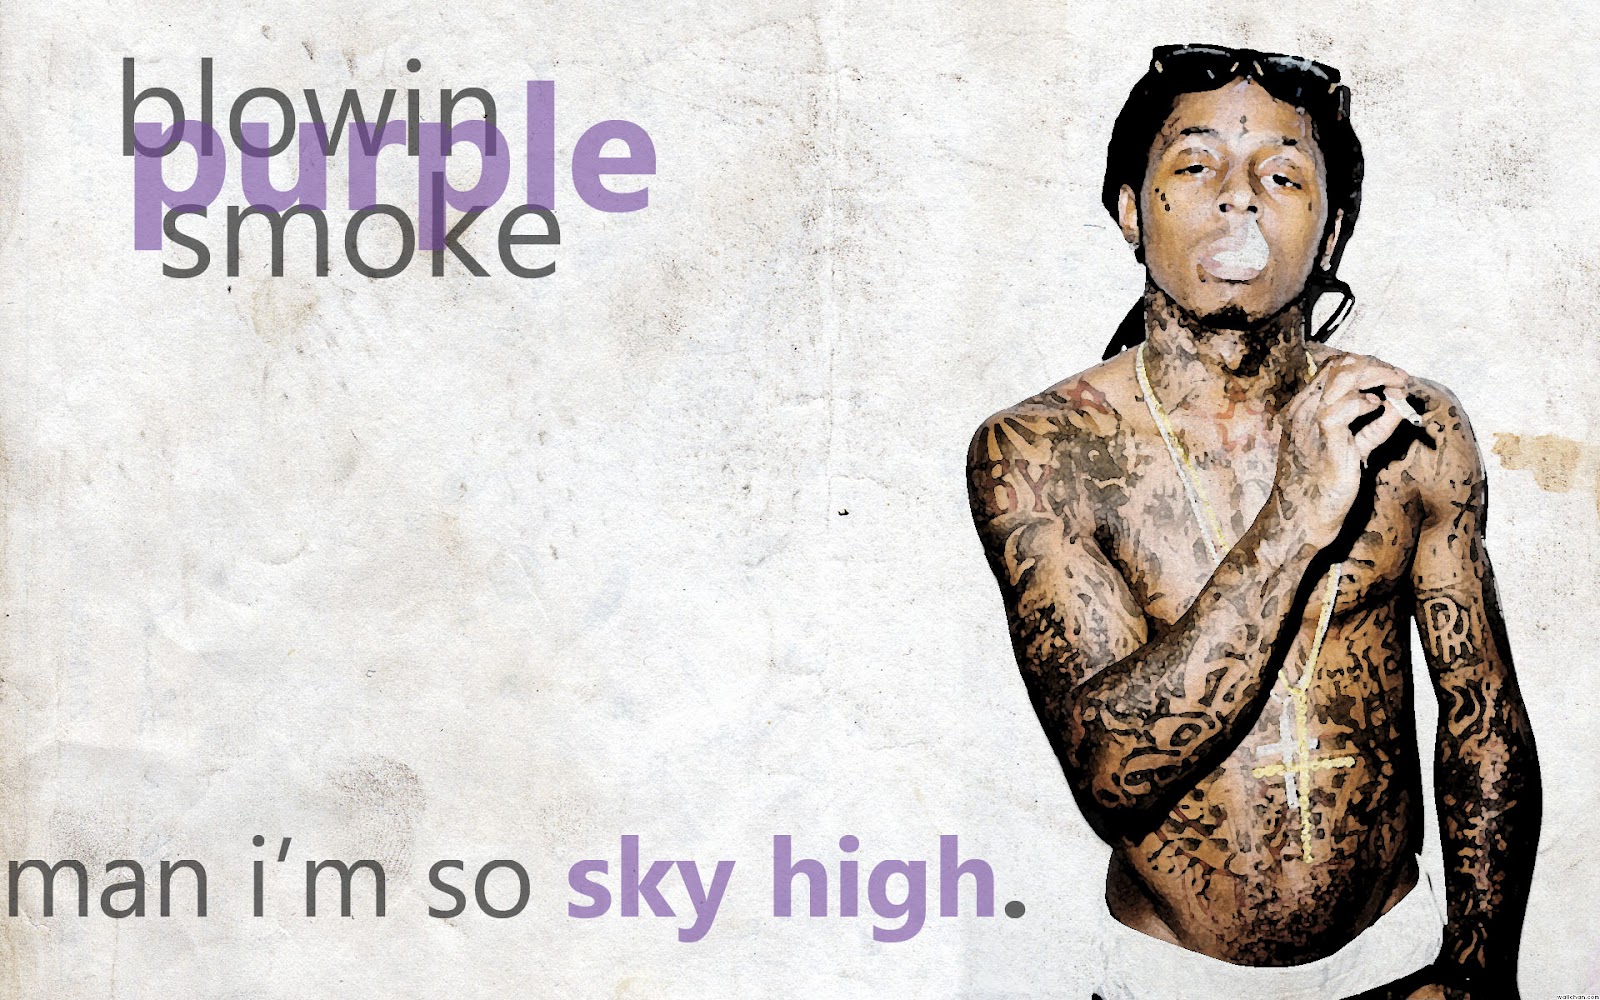 http://4.bp.blogspot.com/-dVeuqZK2nLU/UBy8owsQoII/AAAAAAAAKUs/bzKlV5HL1k4/s1600/lil-wayne-smoking.jpg